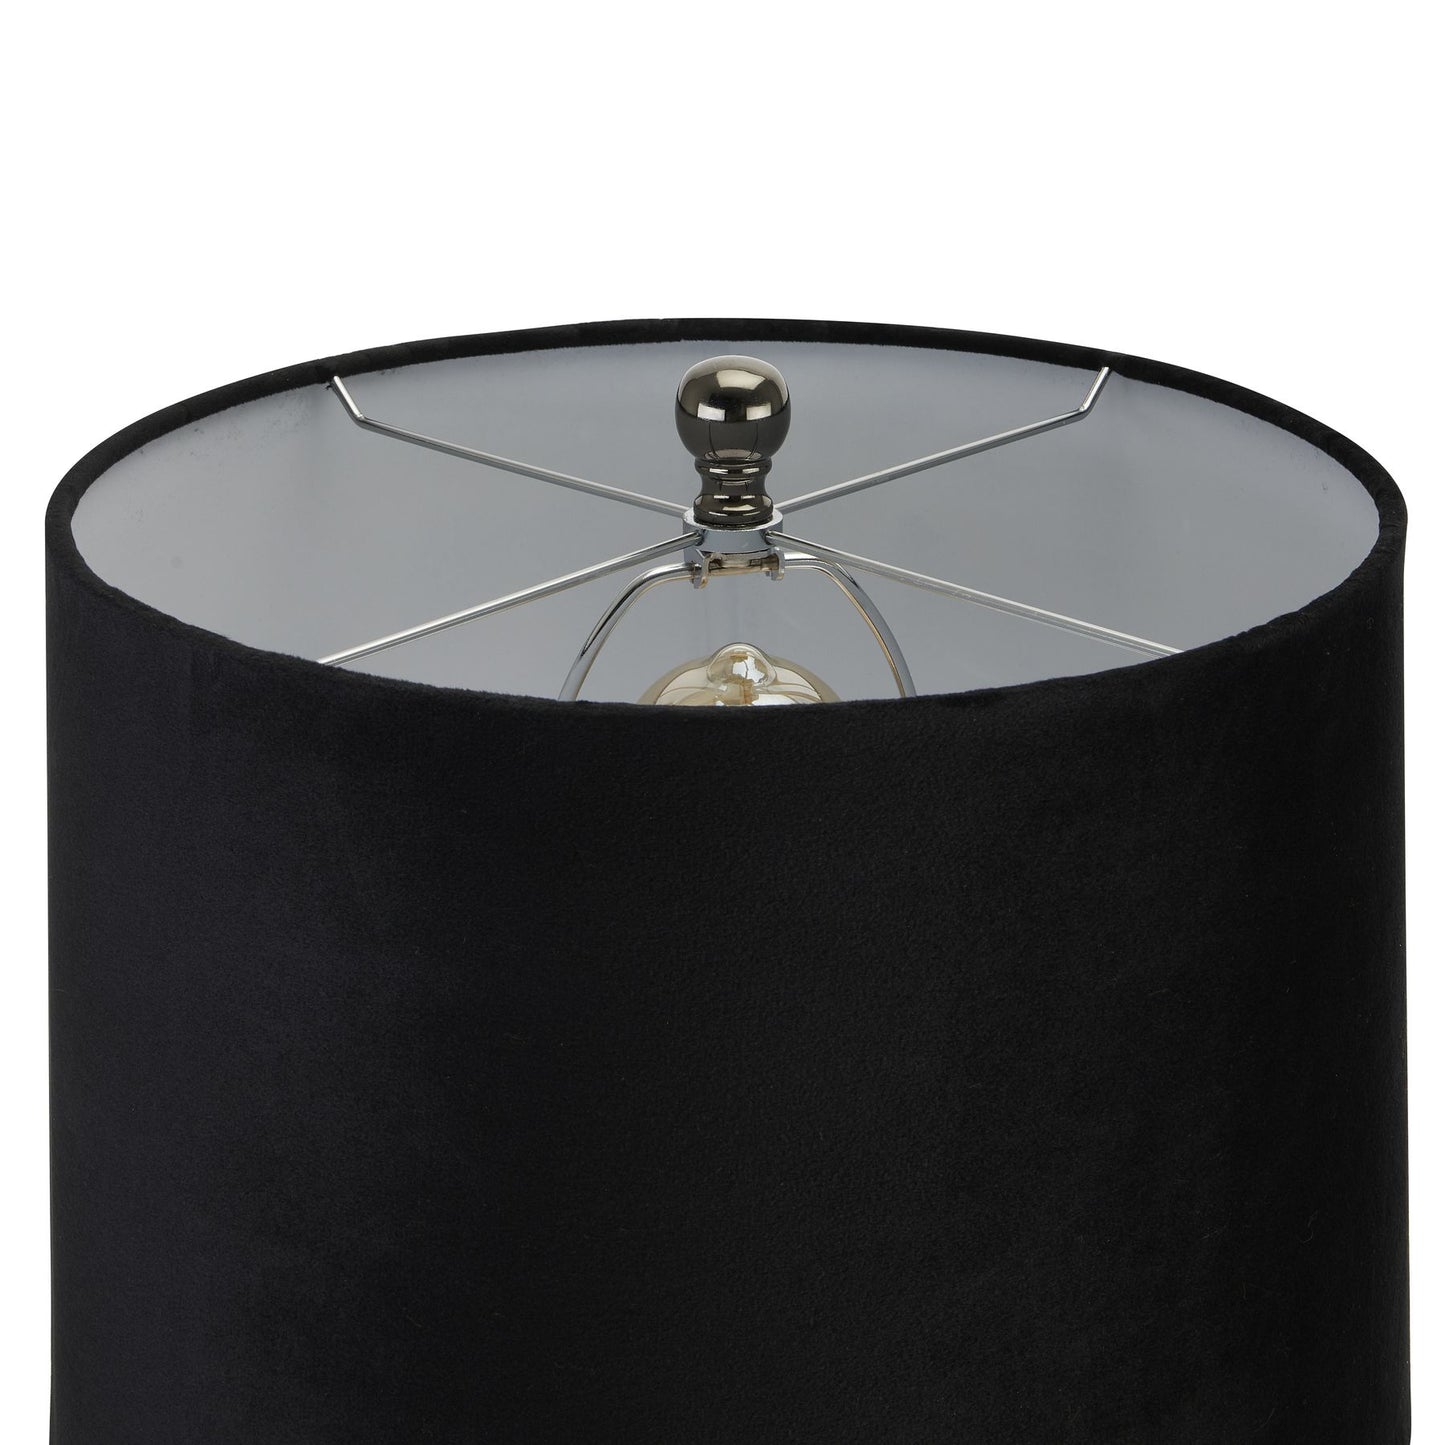 Black & Grey Tortoiseshell Column Table Lamp